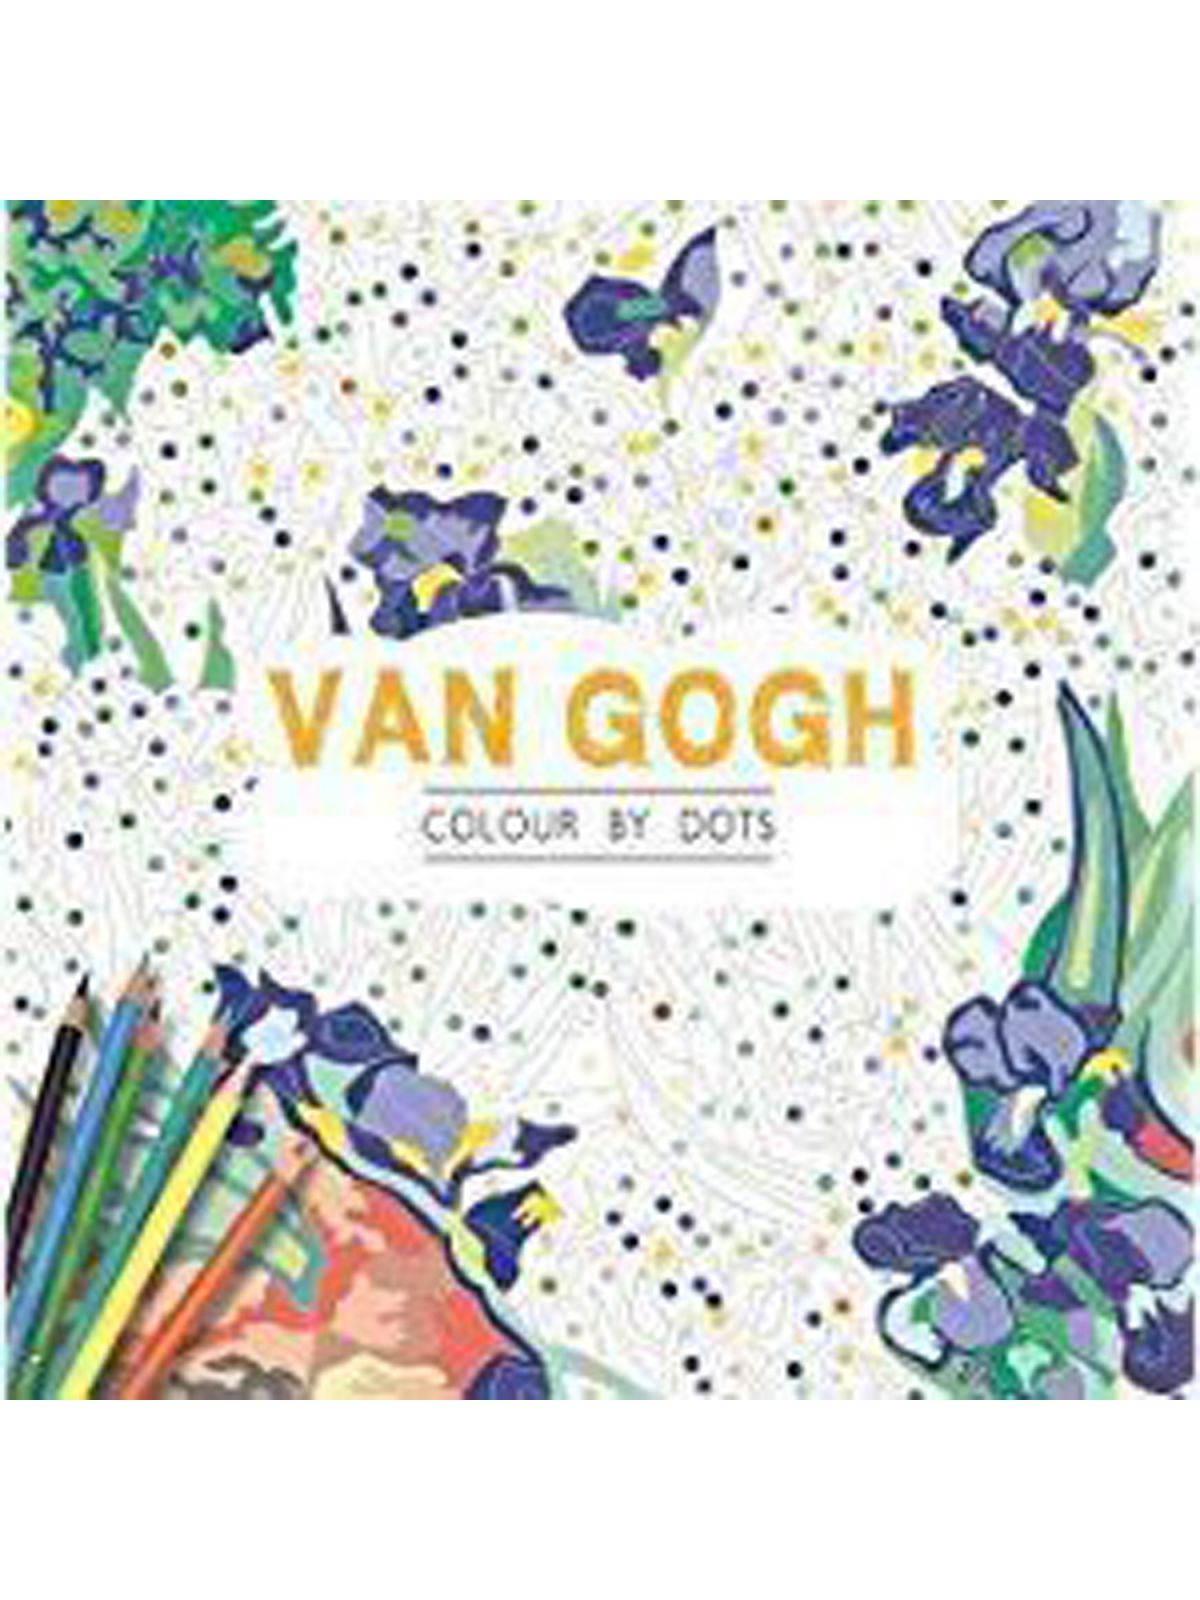 COLOUR BY DOTS: VAN GOGH  Купить Книгу на Английском